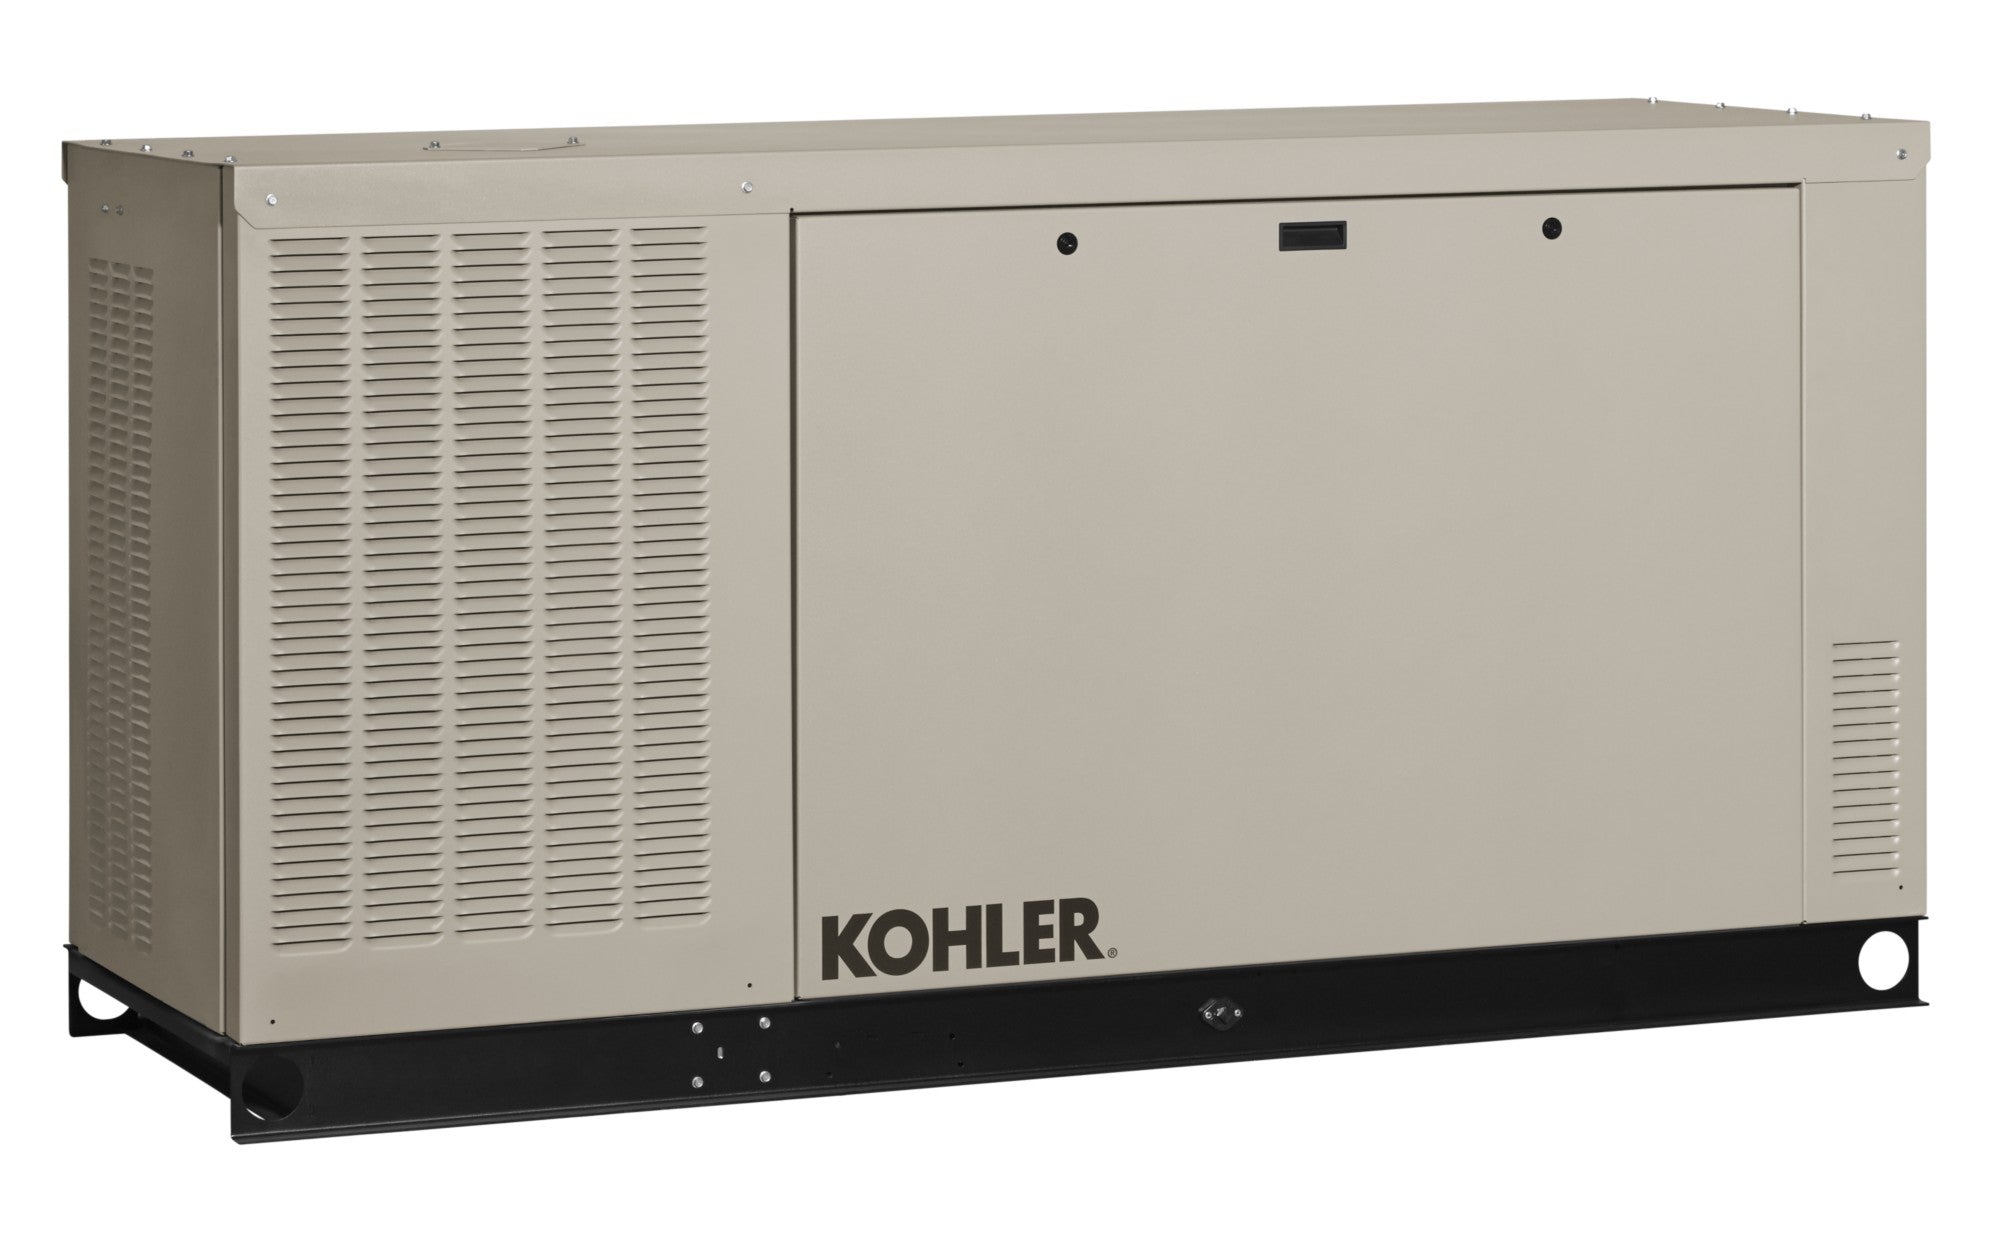 Kohler 60RCLB-QS5 120/240V Single Phase 60kW Standby Power Generator New